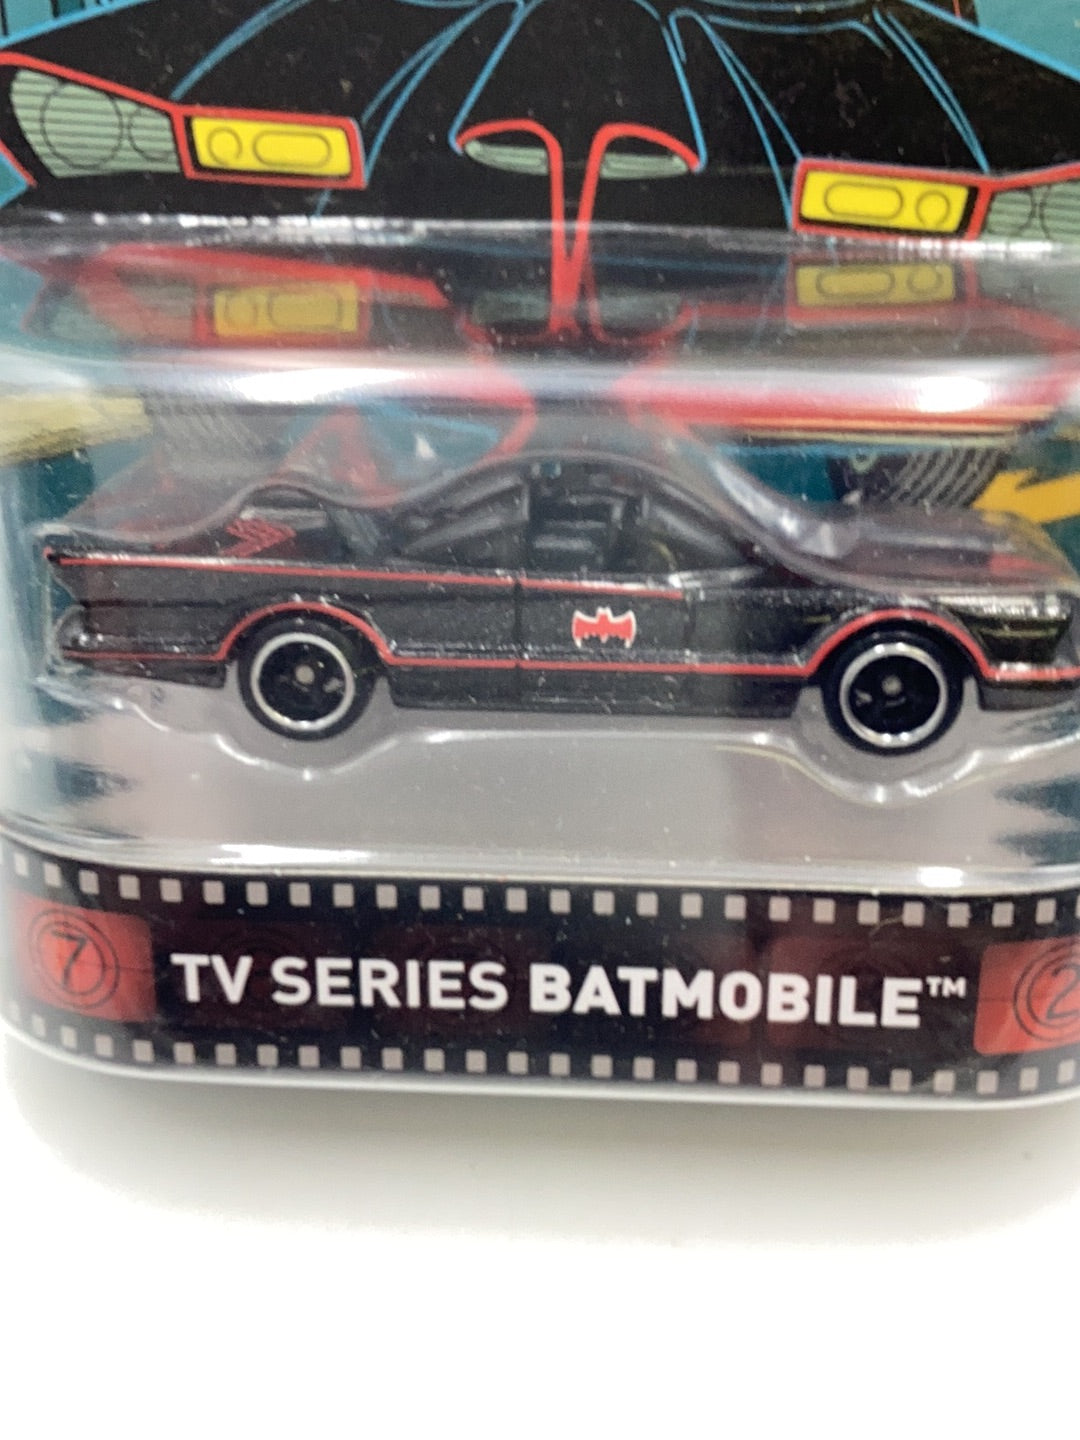 Hot wheels retro entertainment Batman TV Series Batmobile 241E